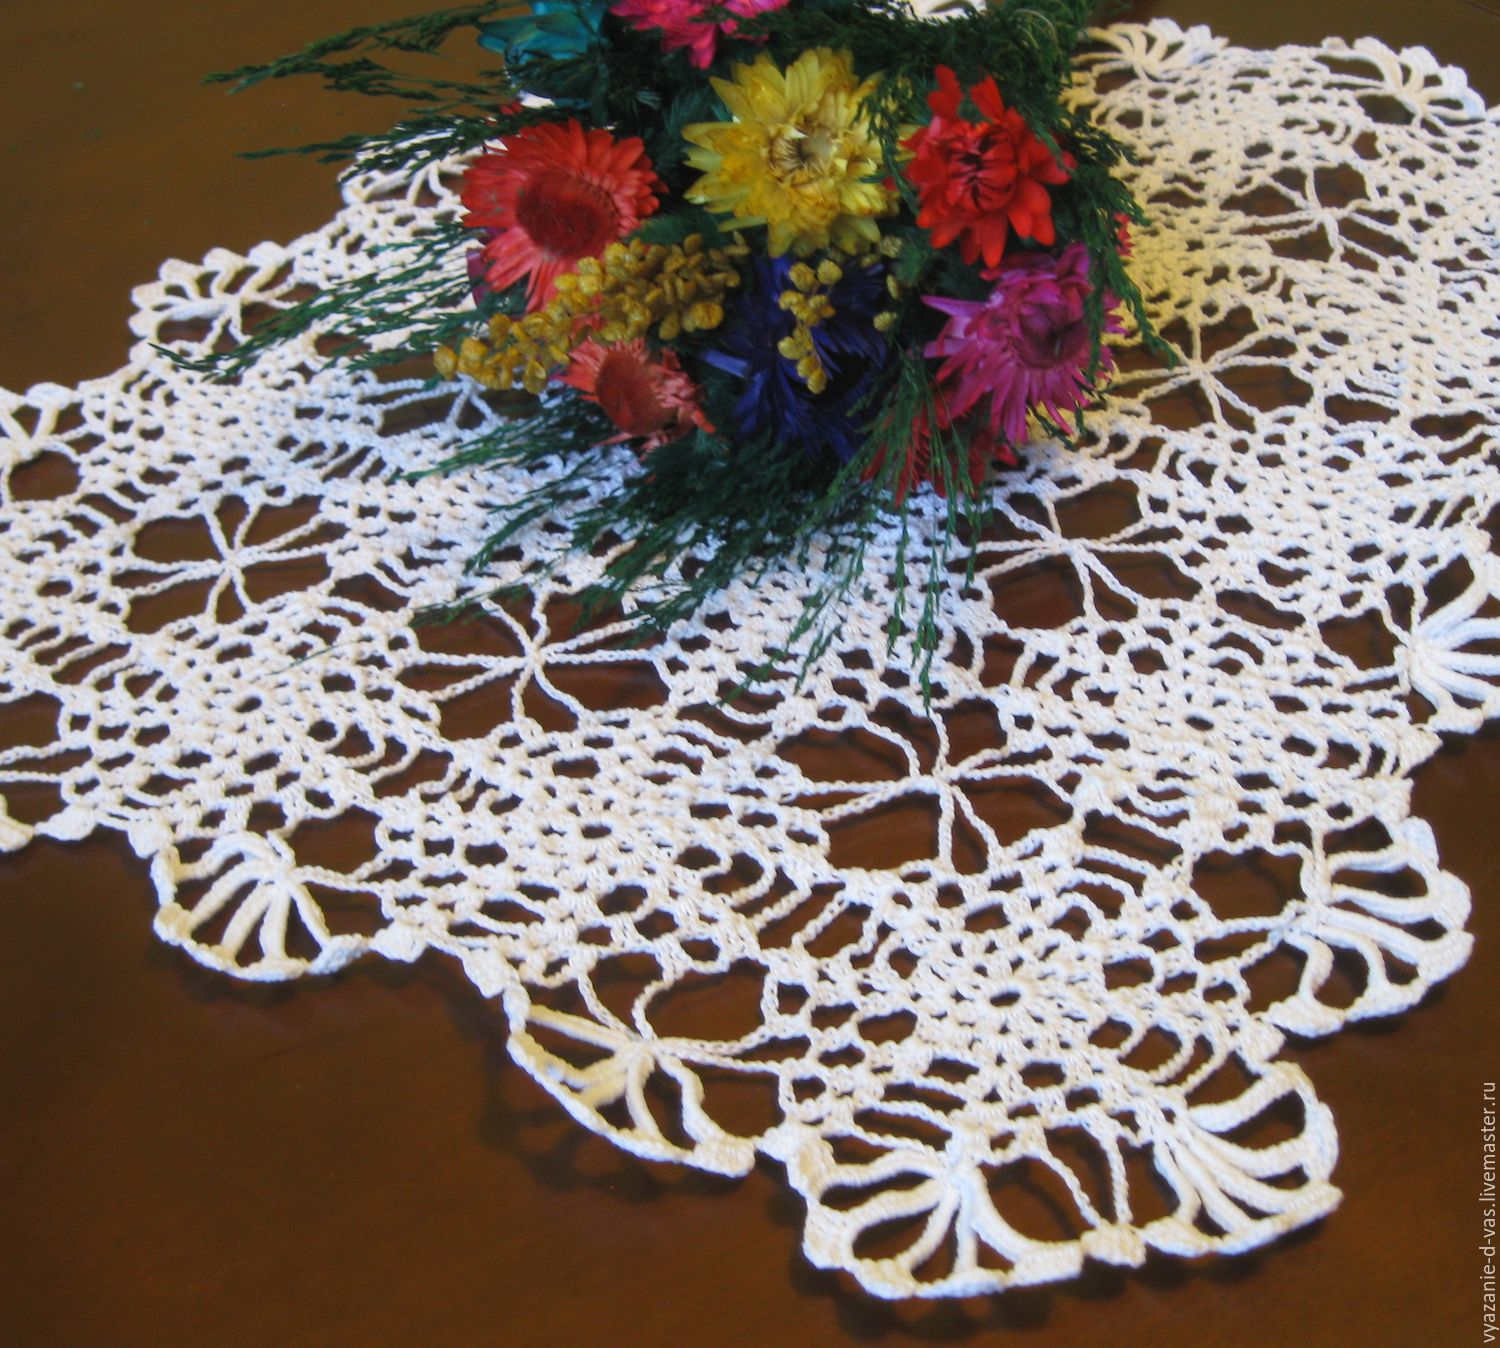 Crochet Lace Patterns Doily Crochet Rectangular White Lace Patterns Shop Online On